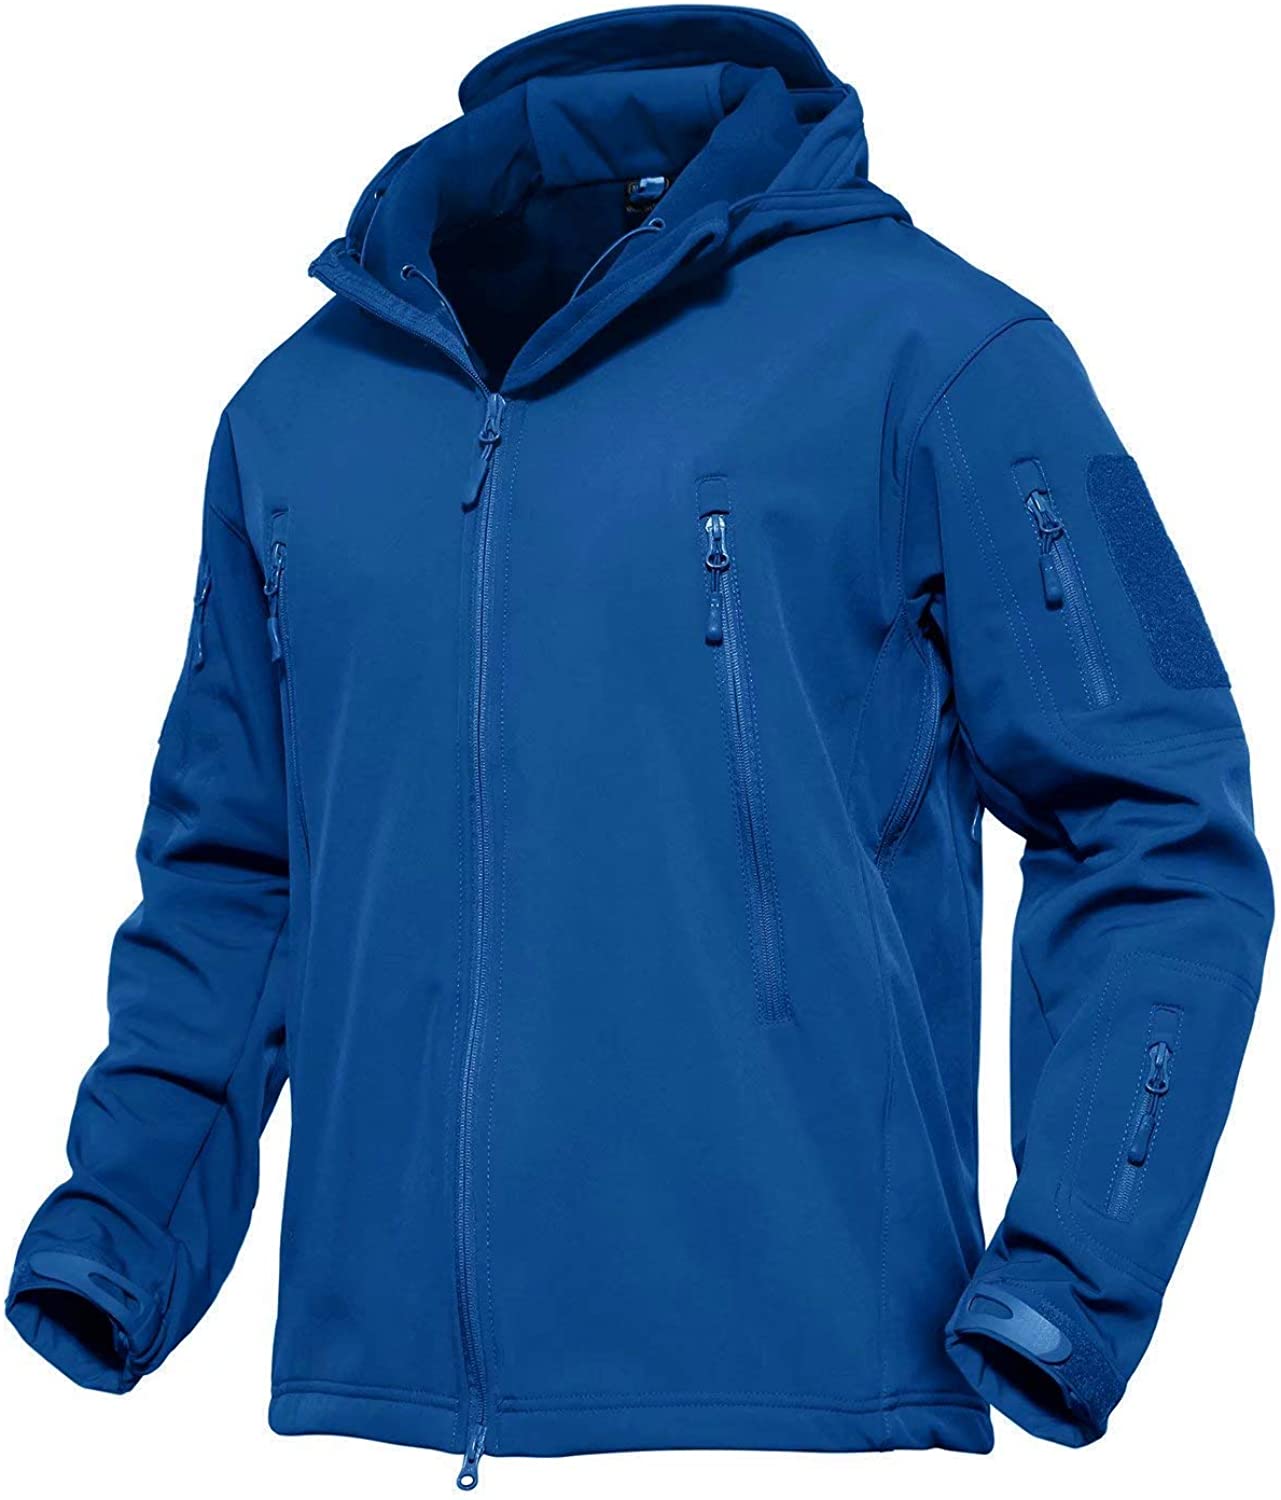 Details about   Men's Winter Waterproof Tactical Jacket Hooded Outdoor Ski Snowboard Coat GD 